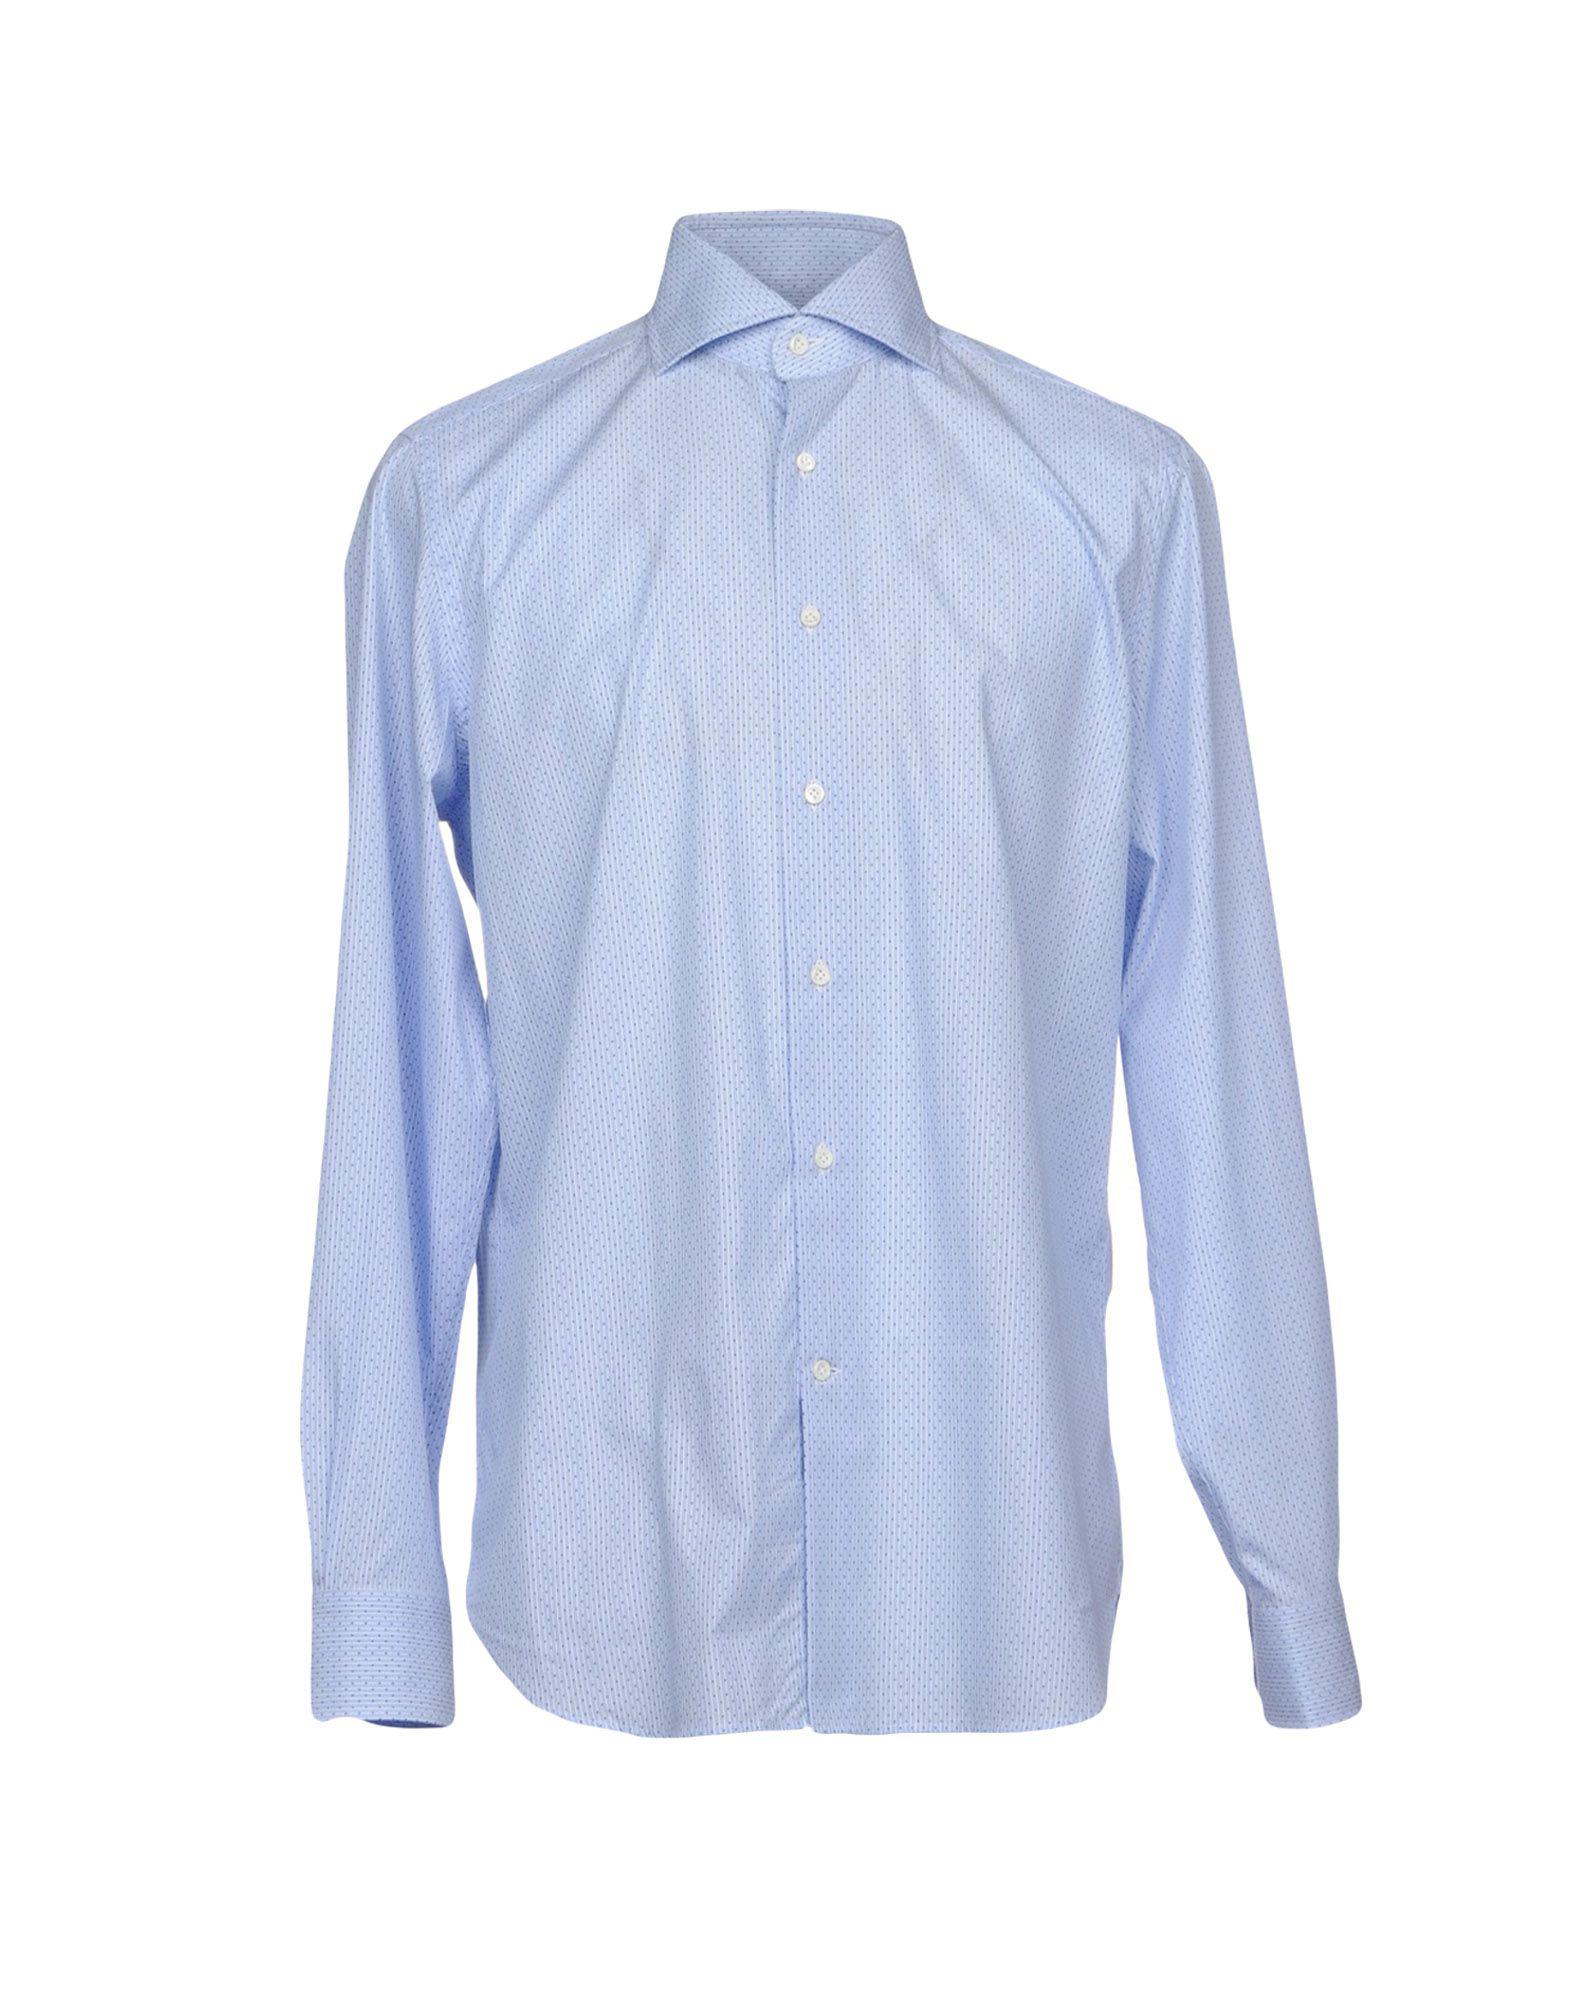 SCABAL® Cotton Shirt in Sky Blue (Blue) for Men - Lyst